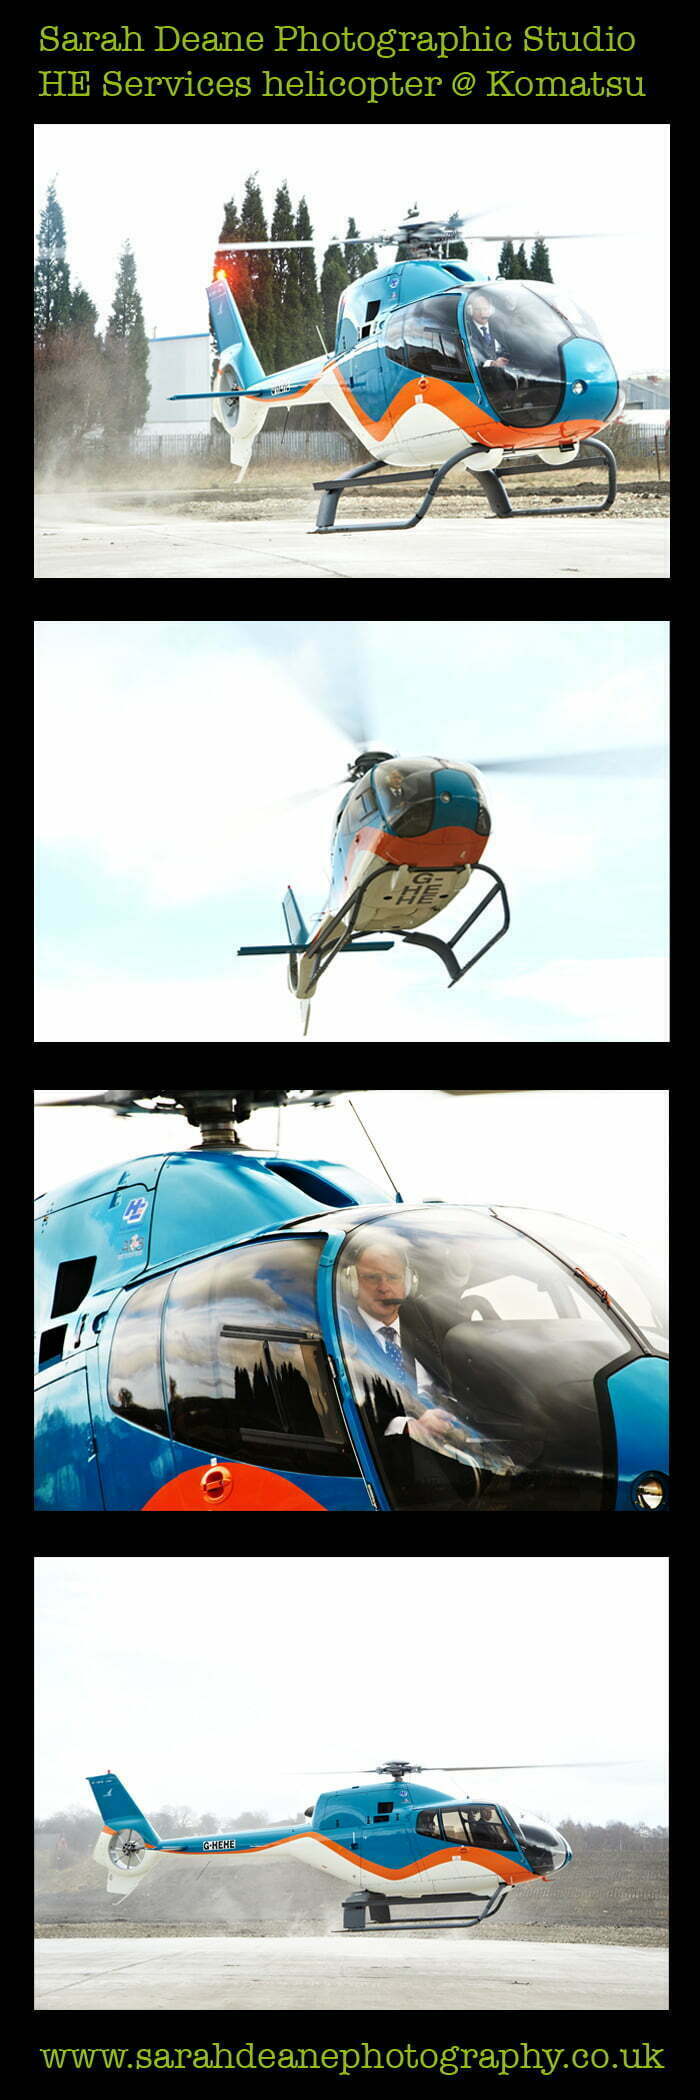 HE Services helicopter photos for Komatsu